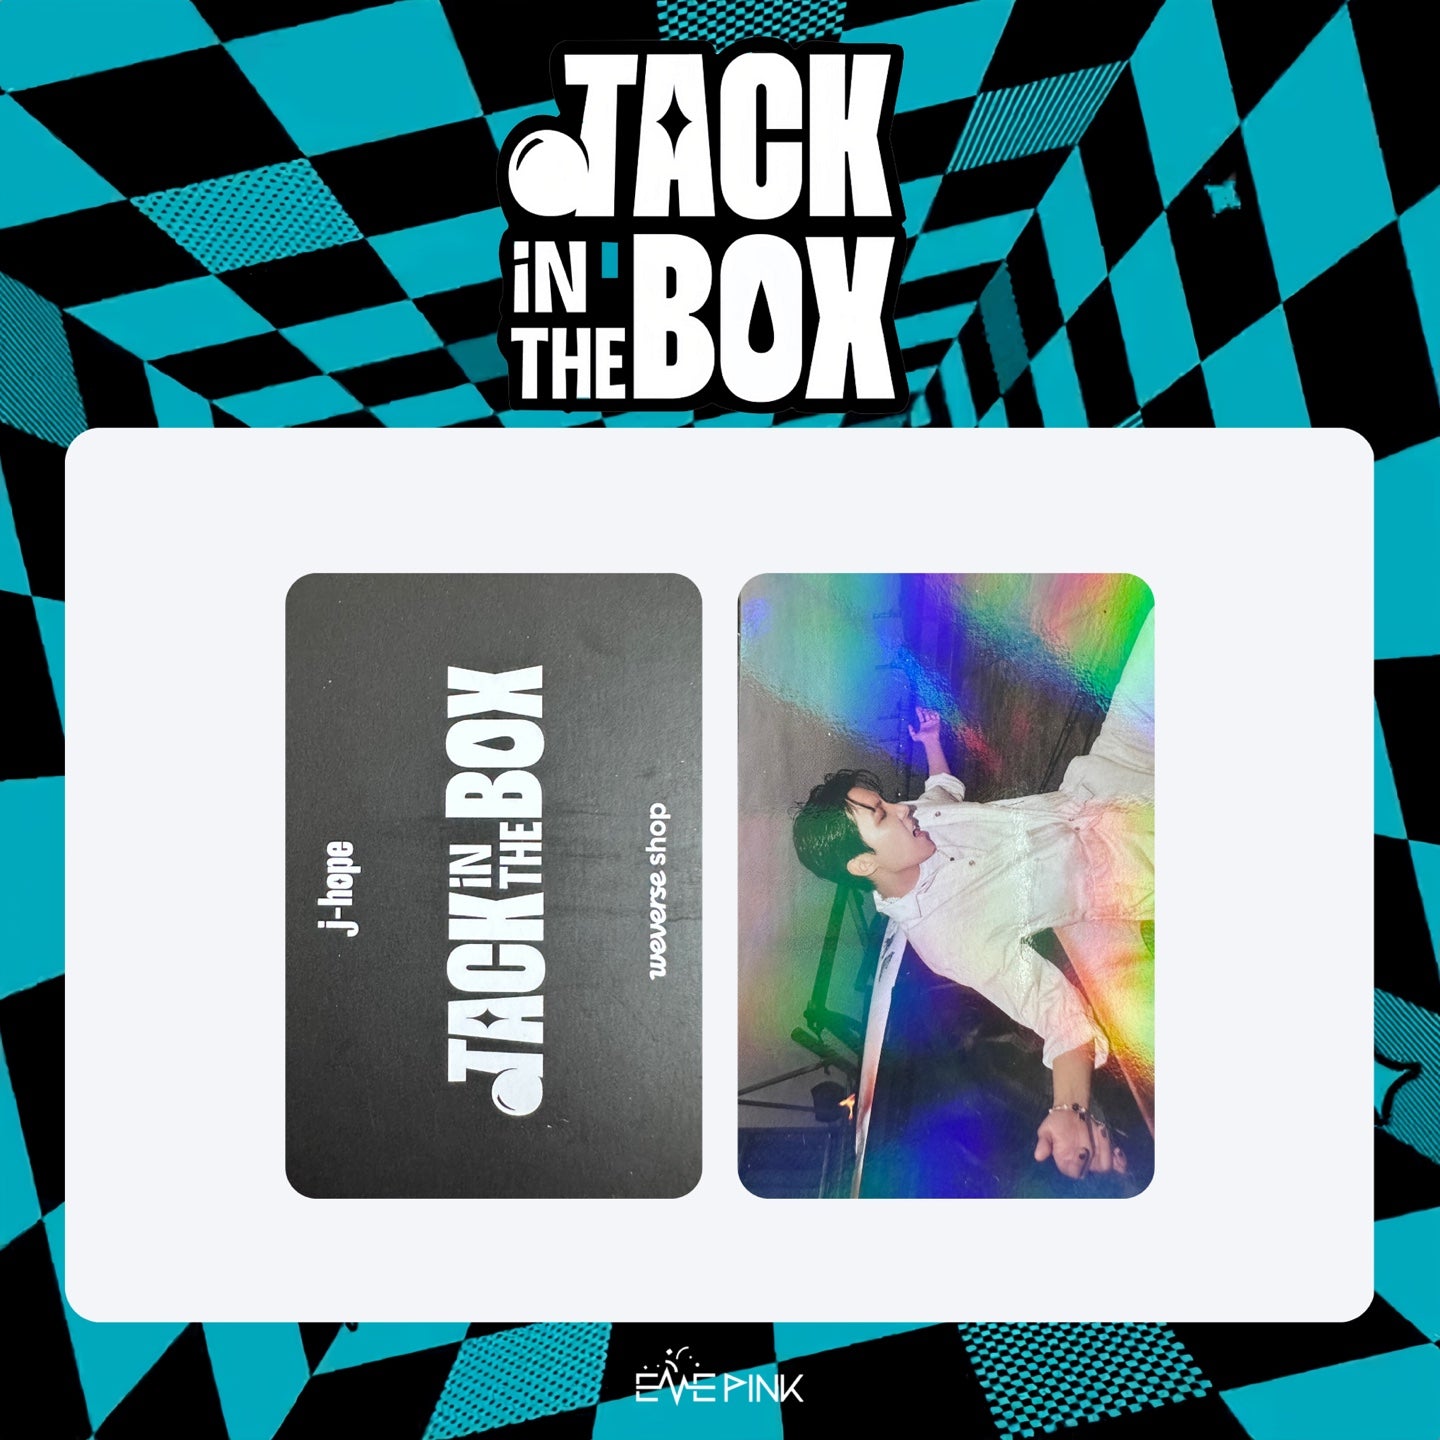 J-Hope - Jack in The Box (Weverse Album)